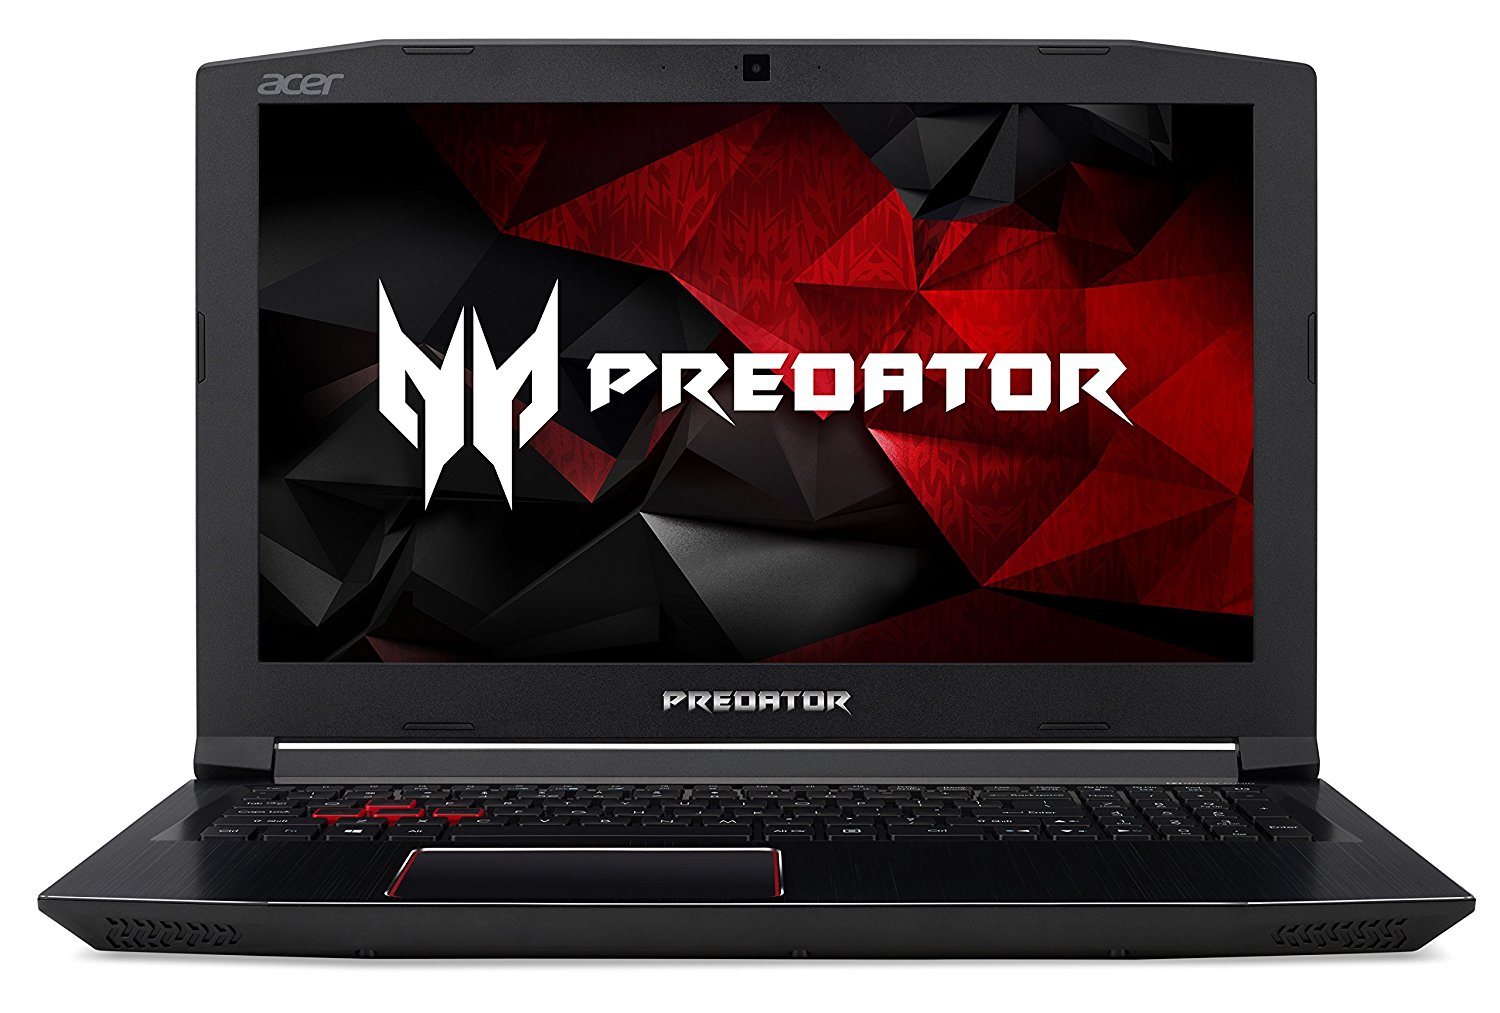 Gambar Acer Predator 15 (G9-593)